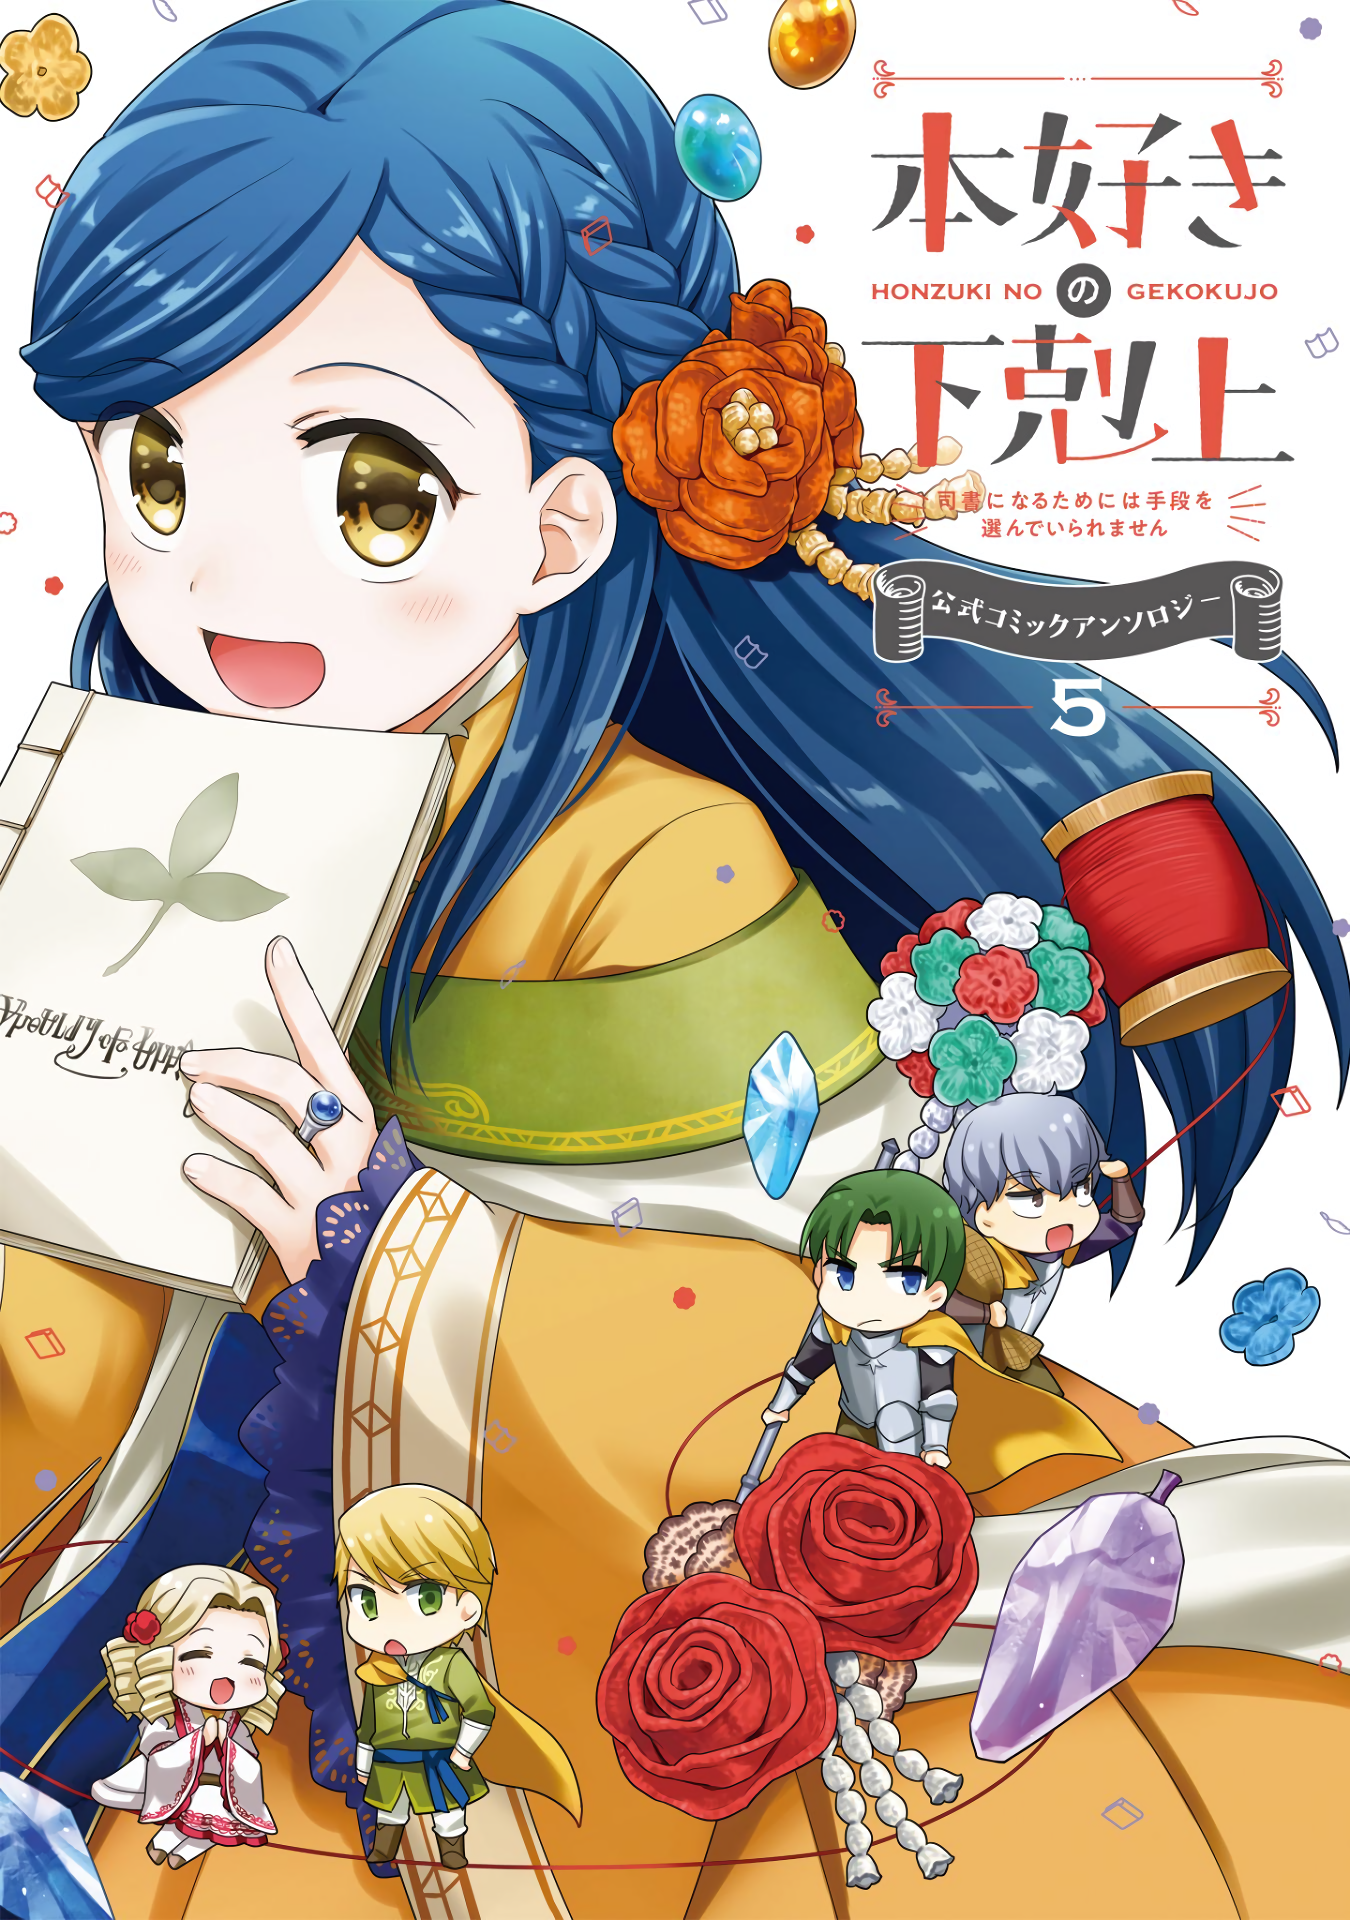 Honzuki no Gekokujo Part 1 - Manga Version - Vol. 3